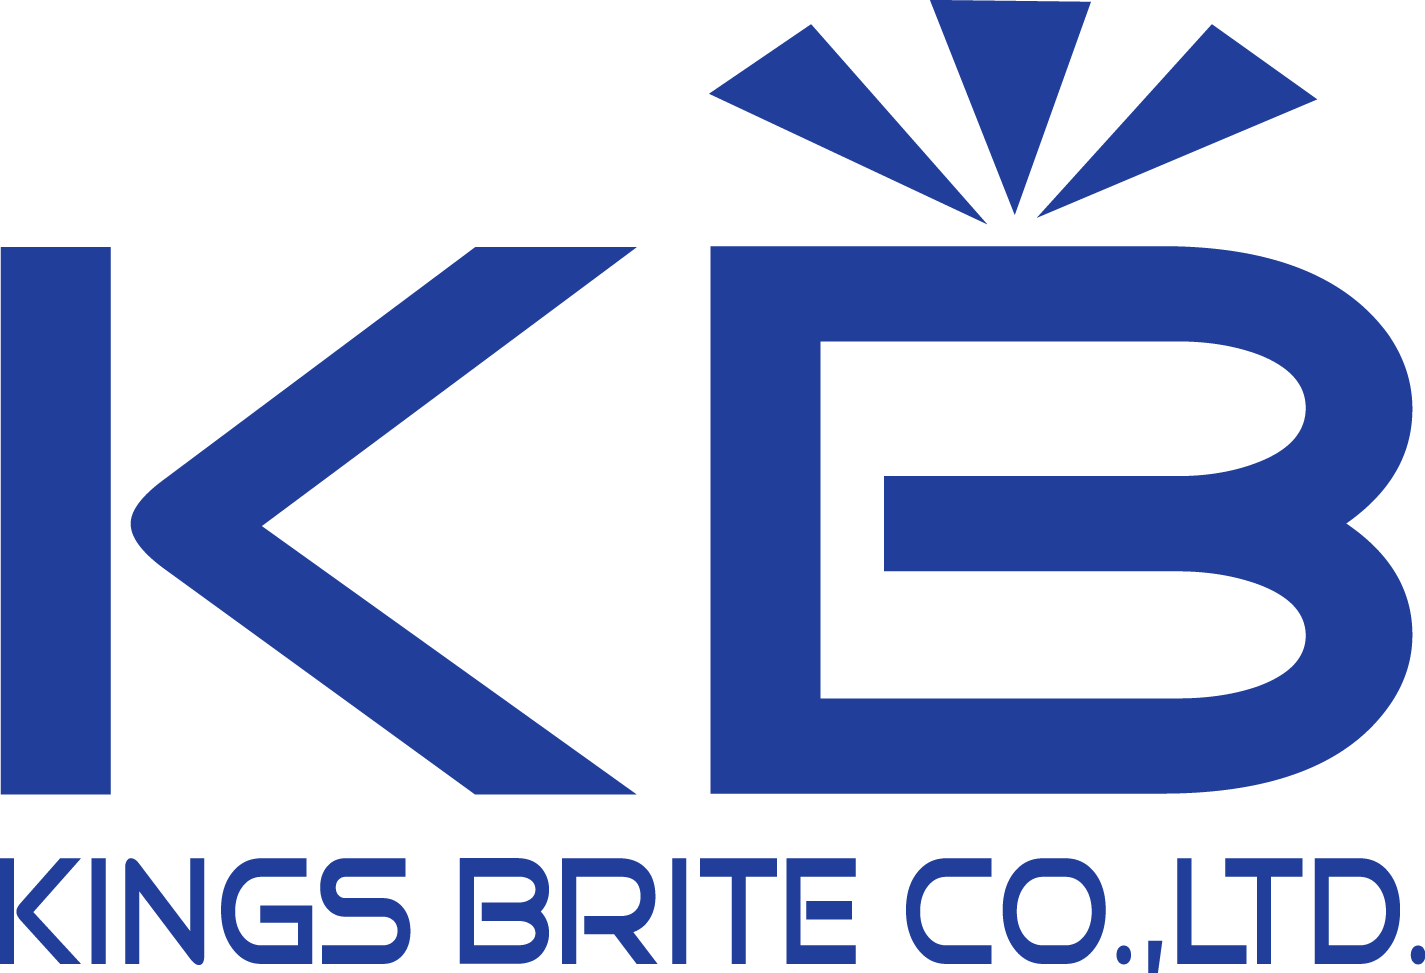 KINGS BRITE CO., LTD.